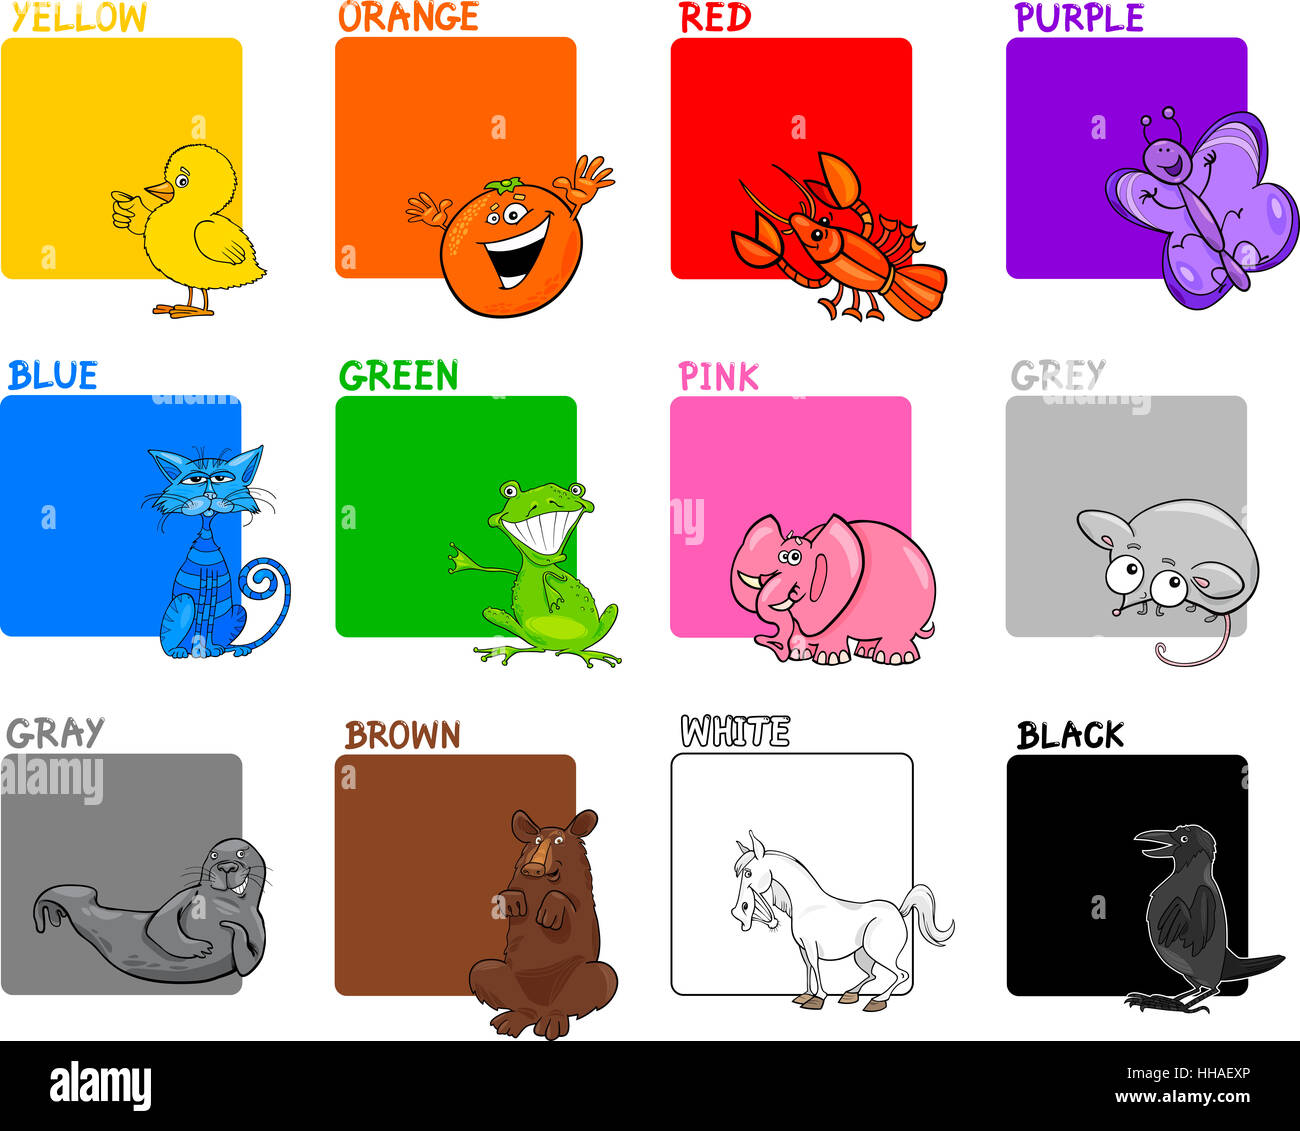 Bildung, Tiere, Illustration, Cartoon, primär-, Farben, Farben, Kind  Stockfotografie - Alamy